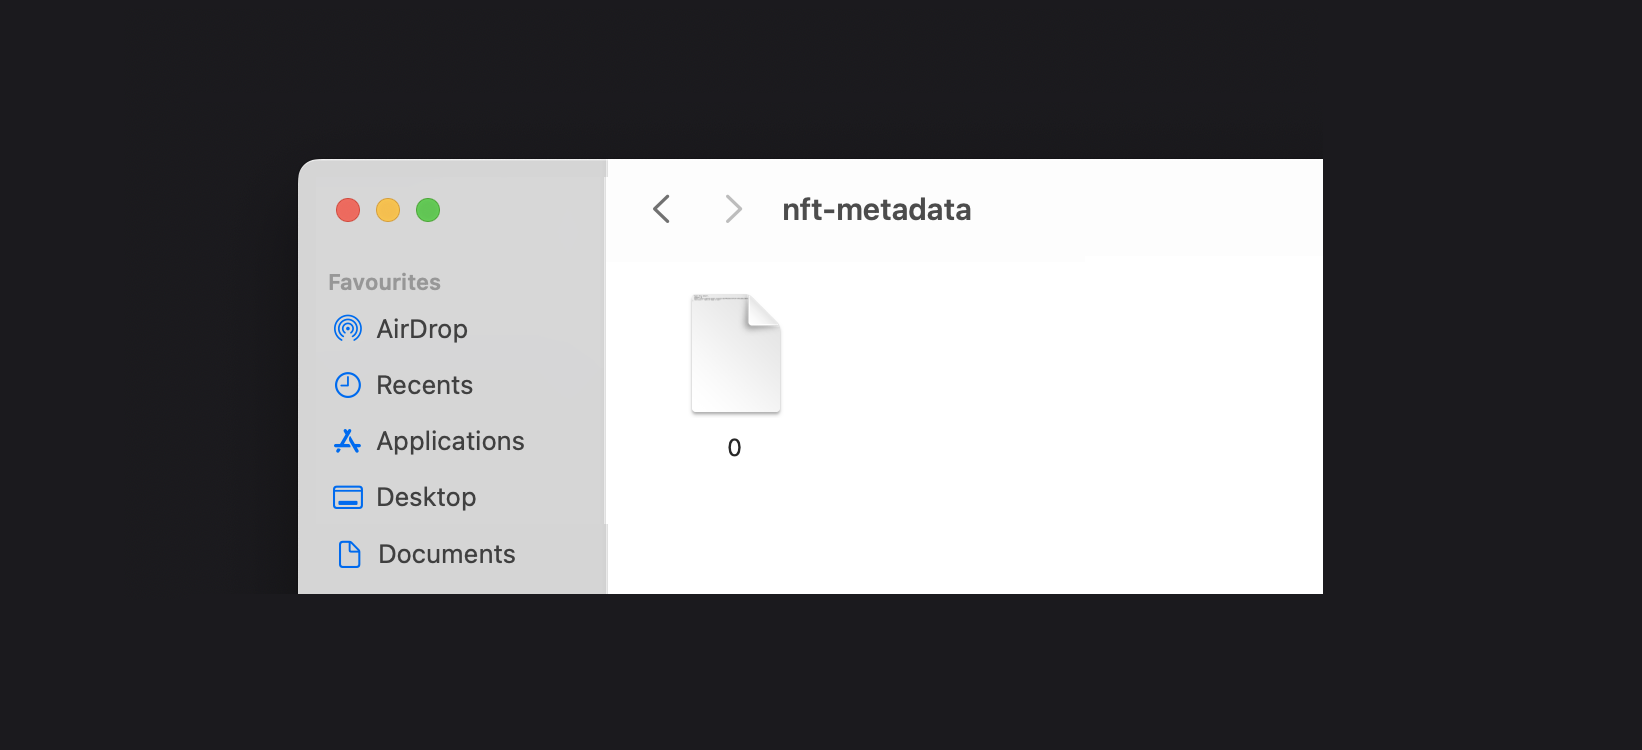 Metadata Folder